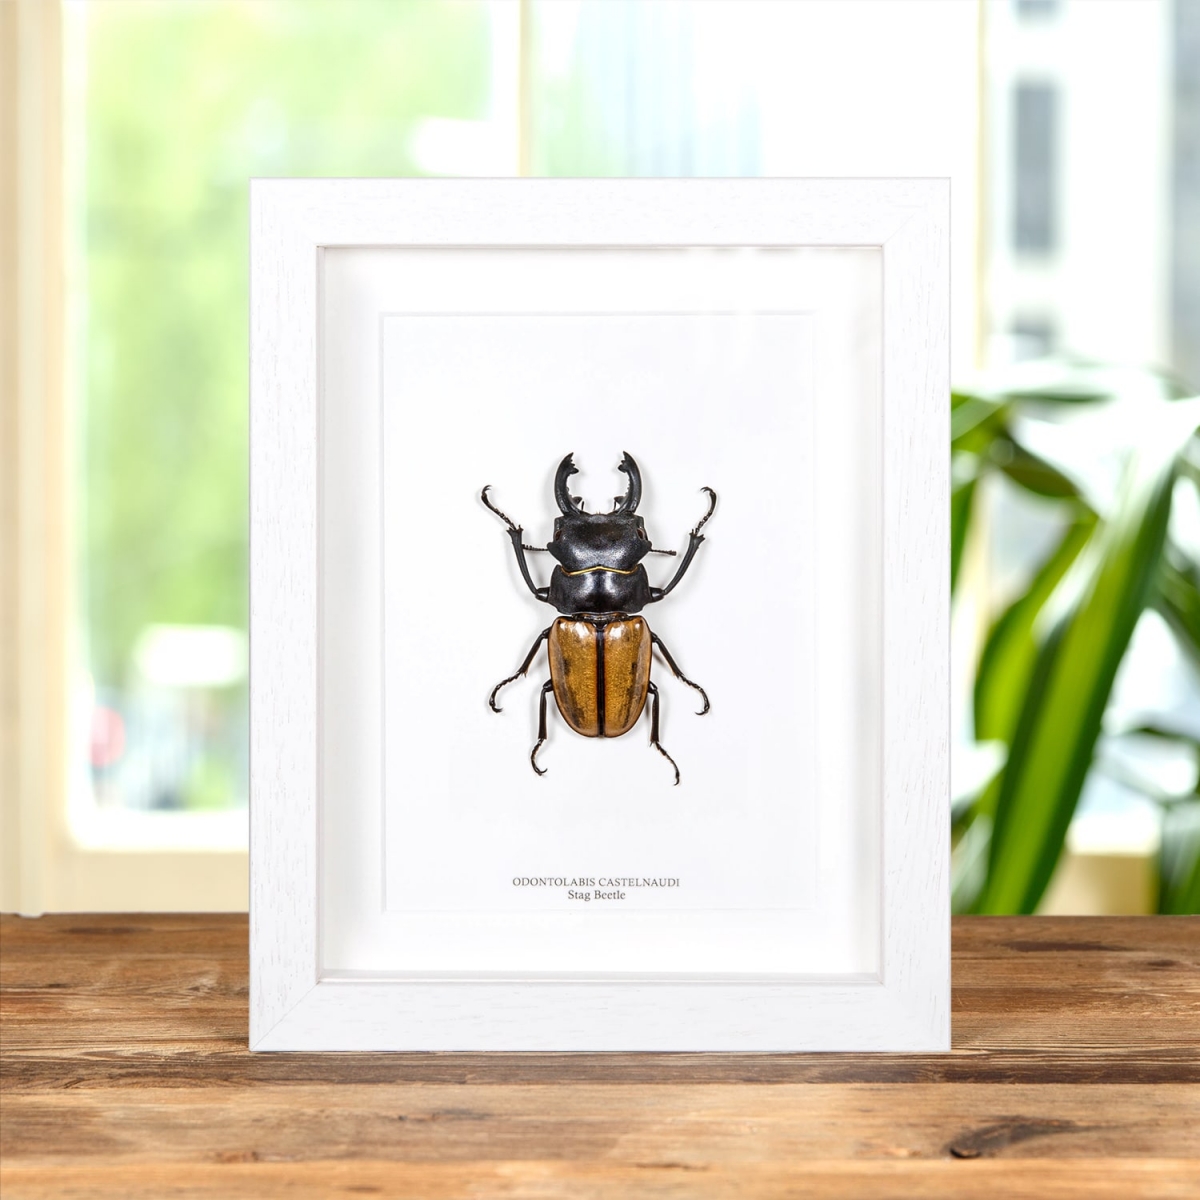 Huge XL Stag Beetle In Box Frame (Odontolabis castelnaudi)